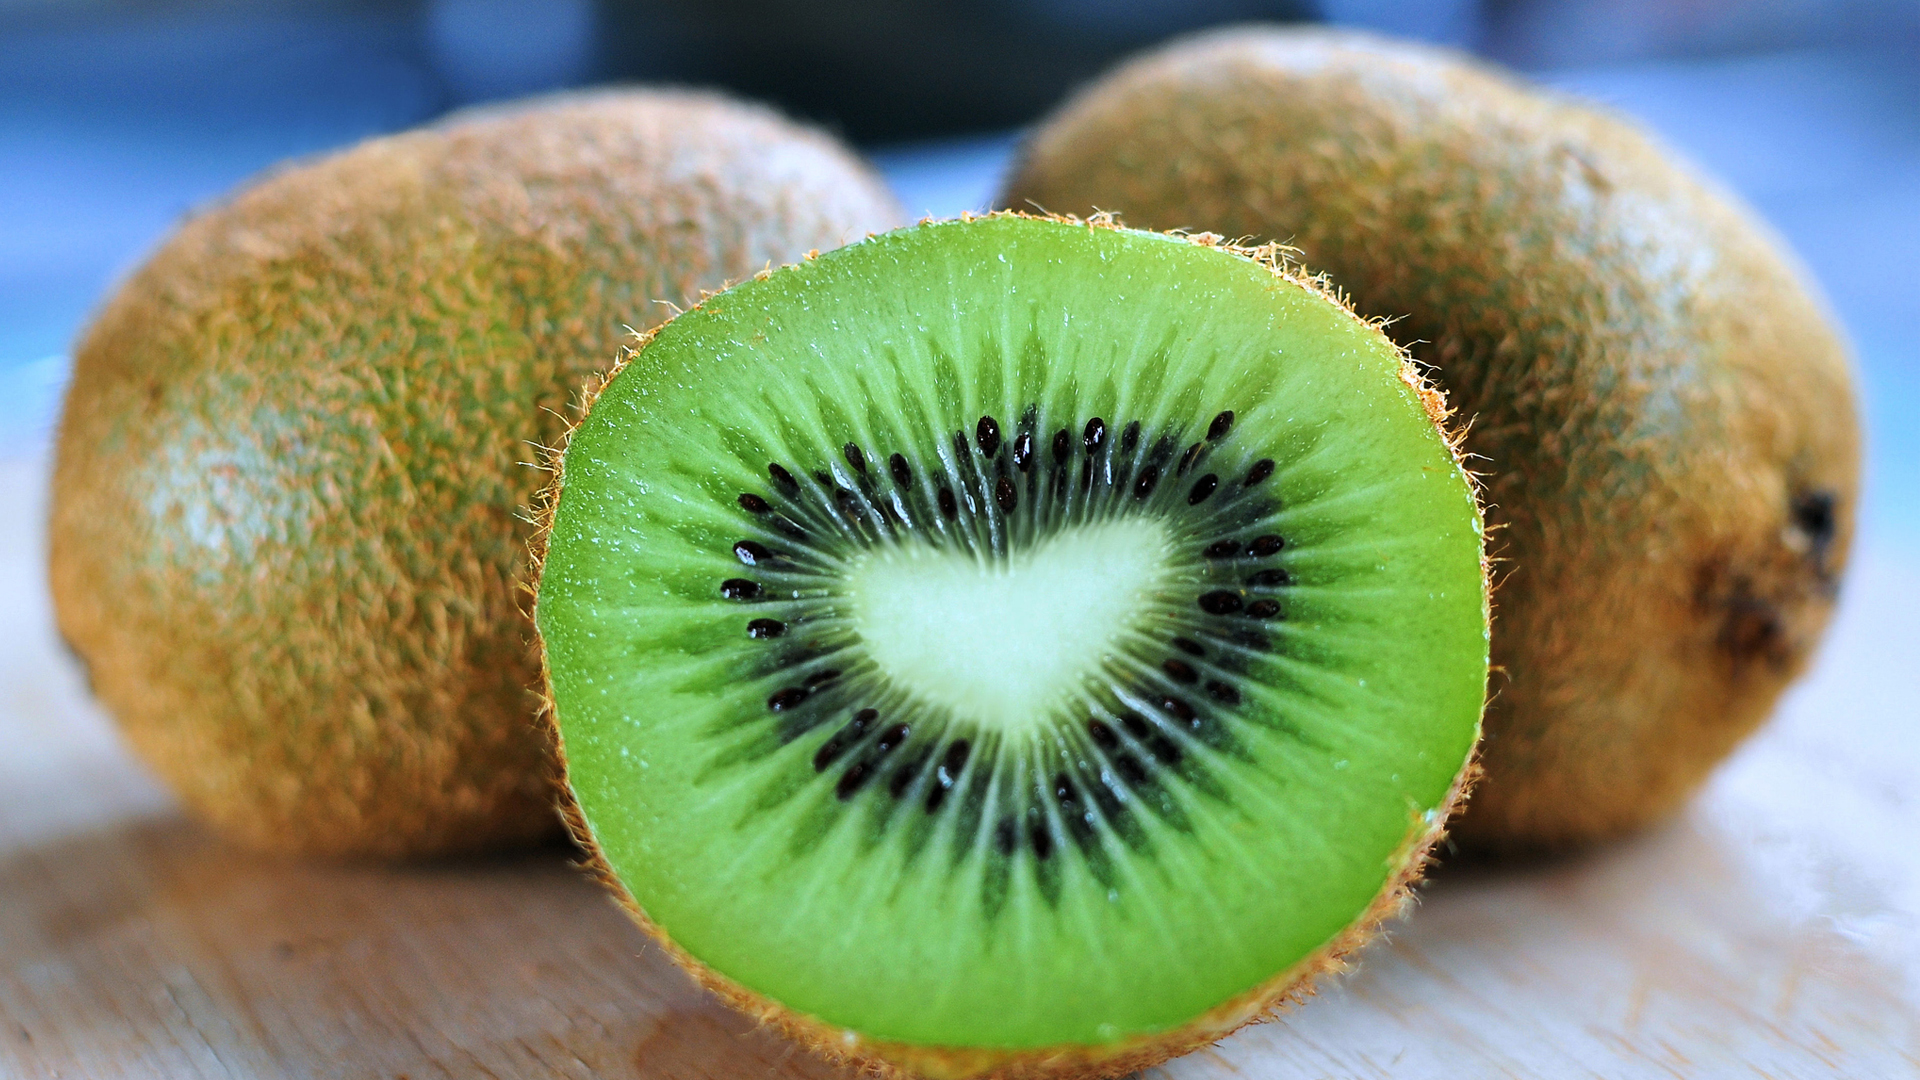 kiwifruit with a heart-shaped center